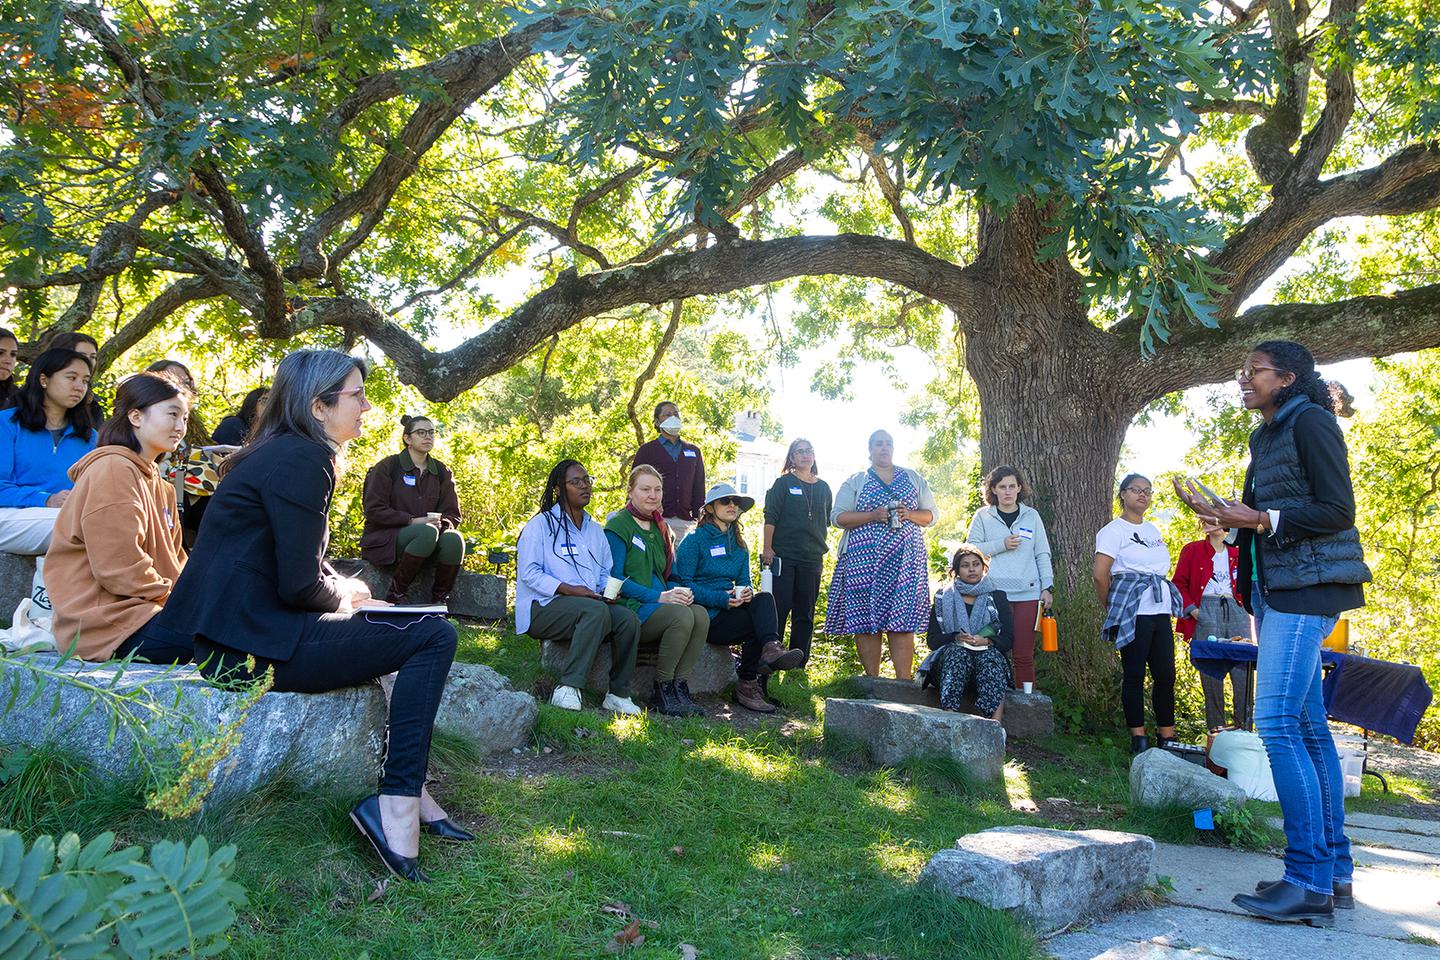 Courtney Streett ’09 gave a tour of the Edible Ecosystem Teaching Garden